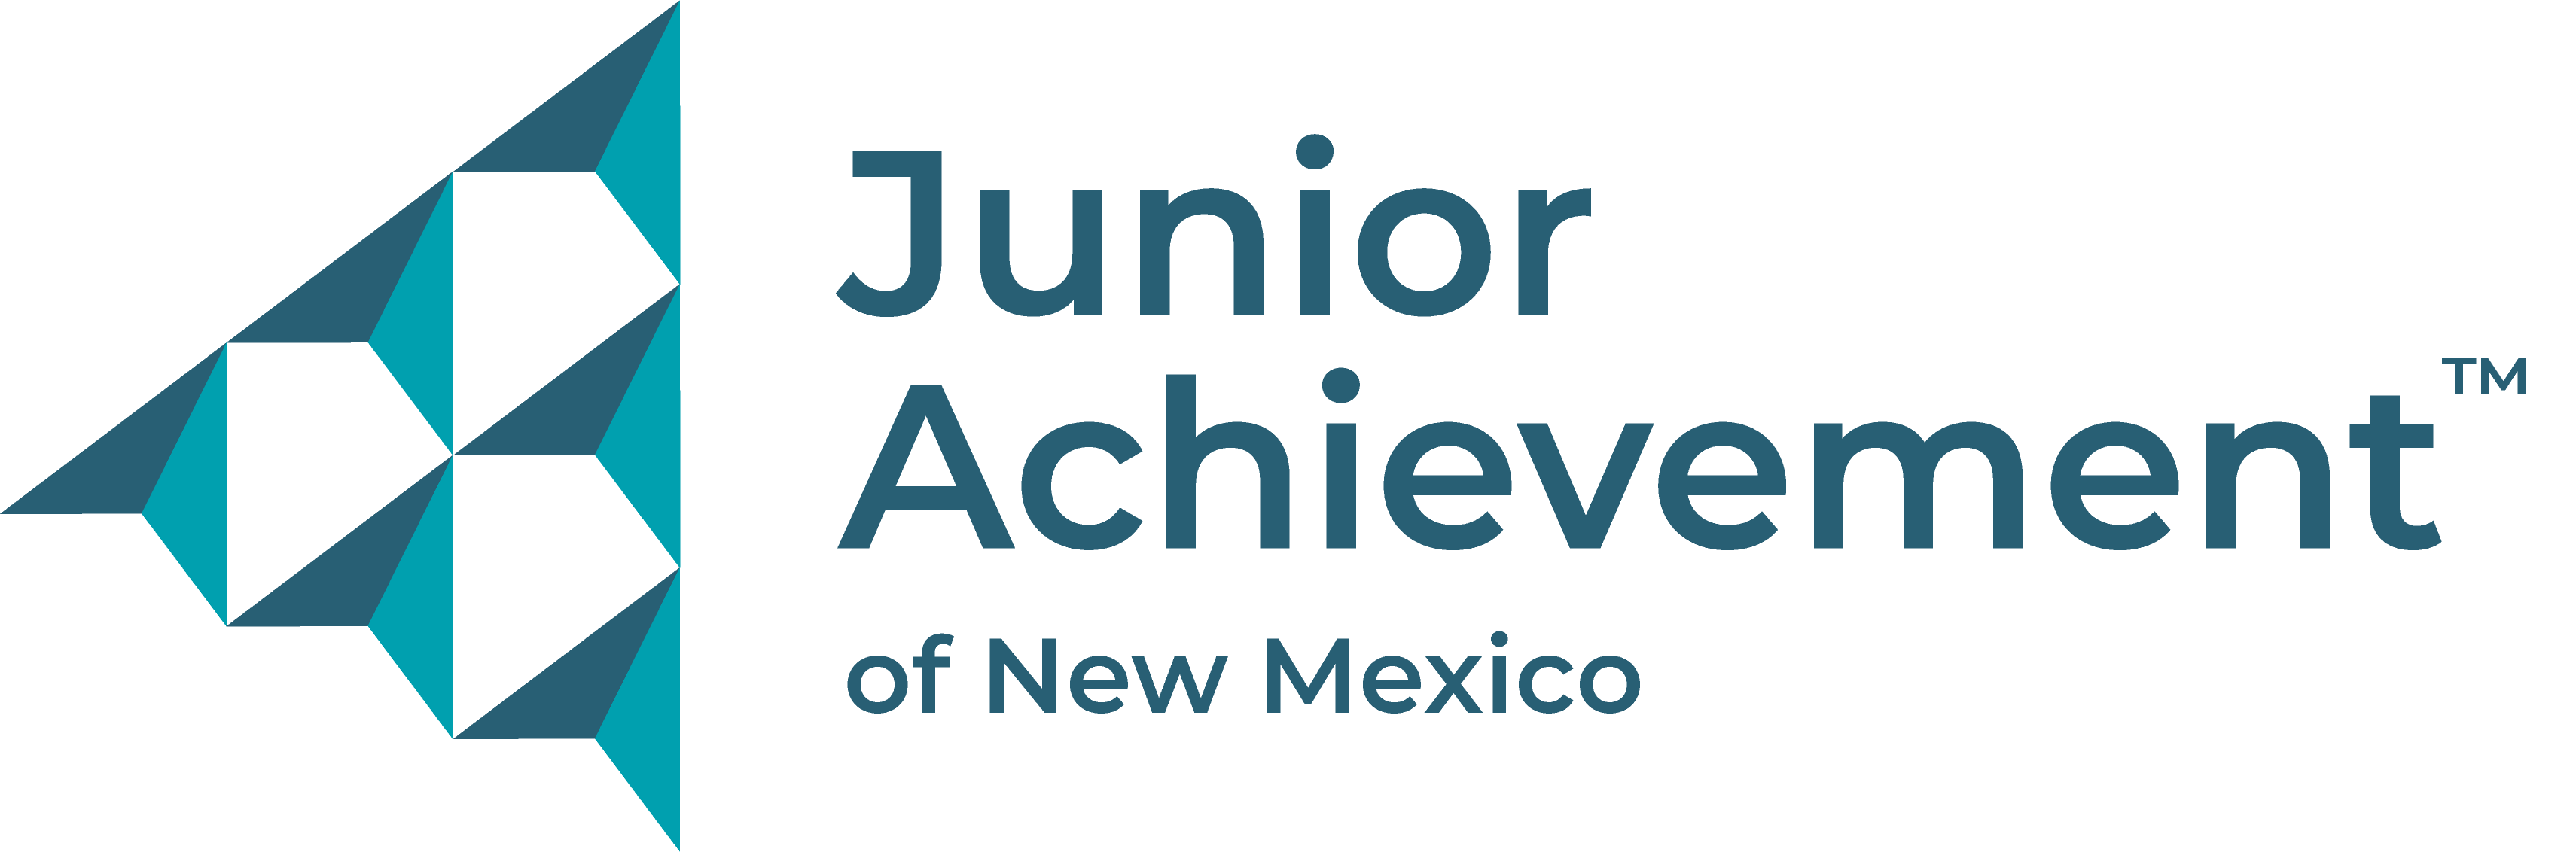 Junior Achievement of New Mexico logo